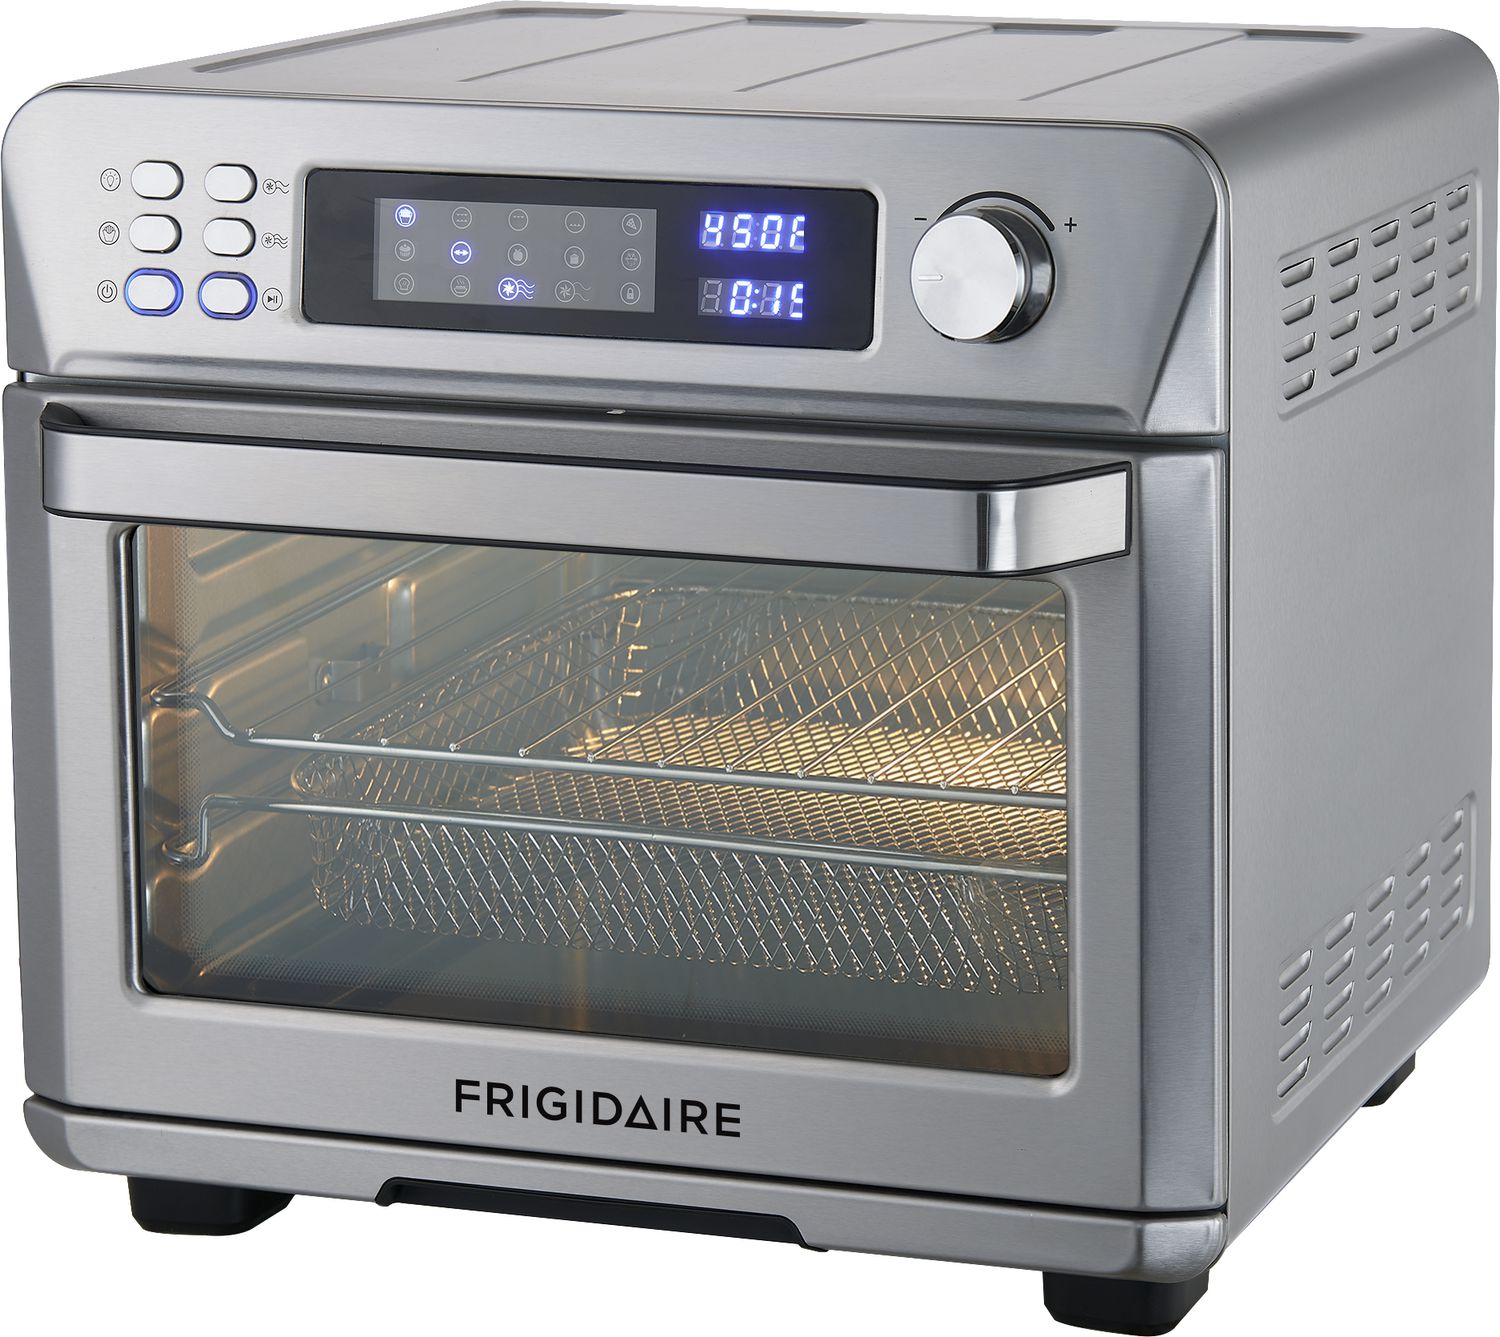 Frigidaire Digital Air Fryer Oven-Stainless Steel- 25L | Walmart Canada